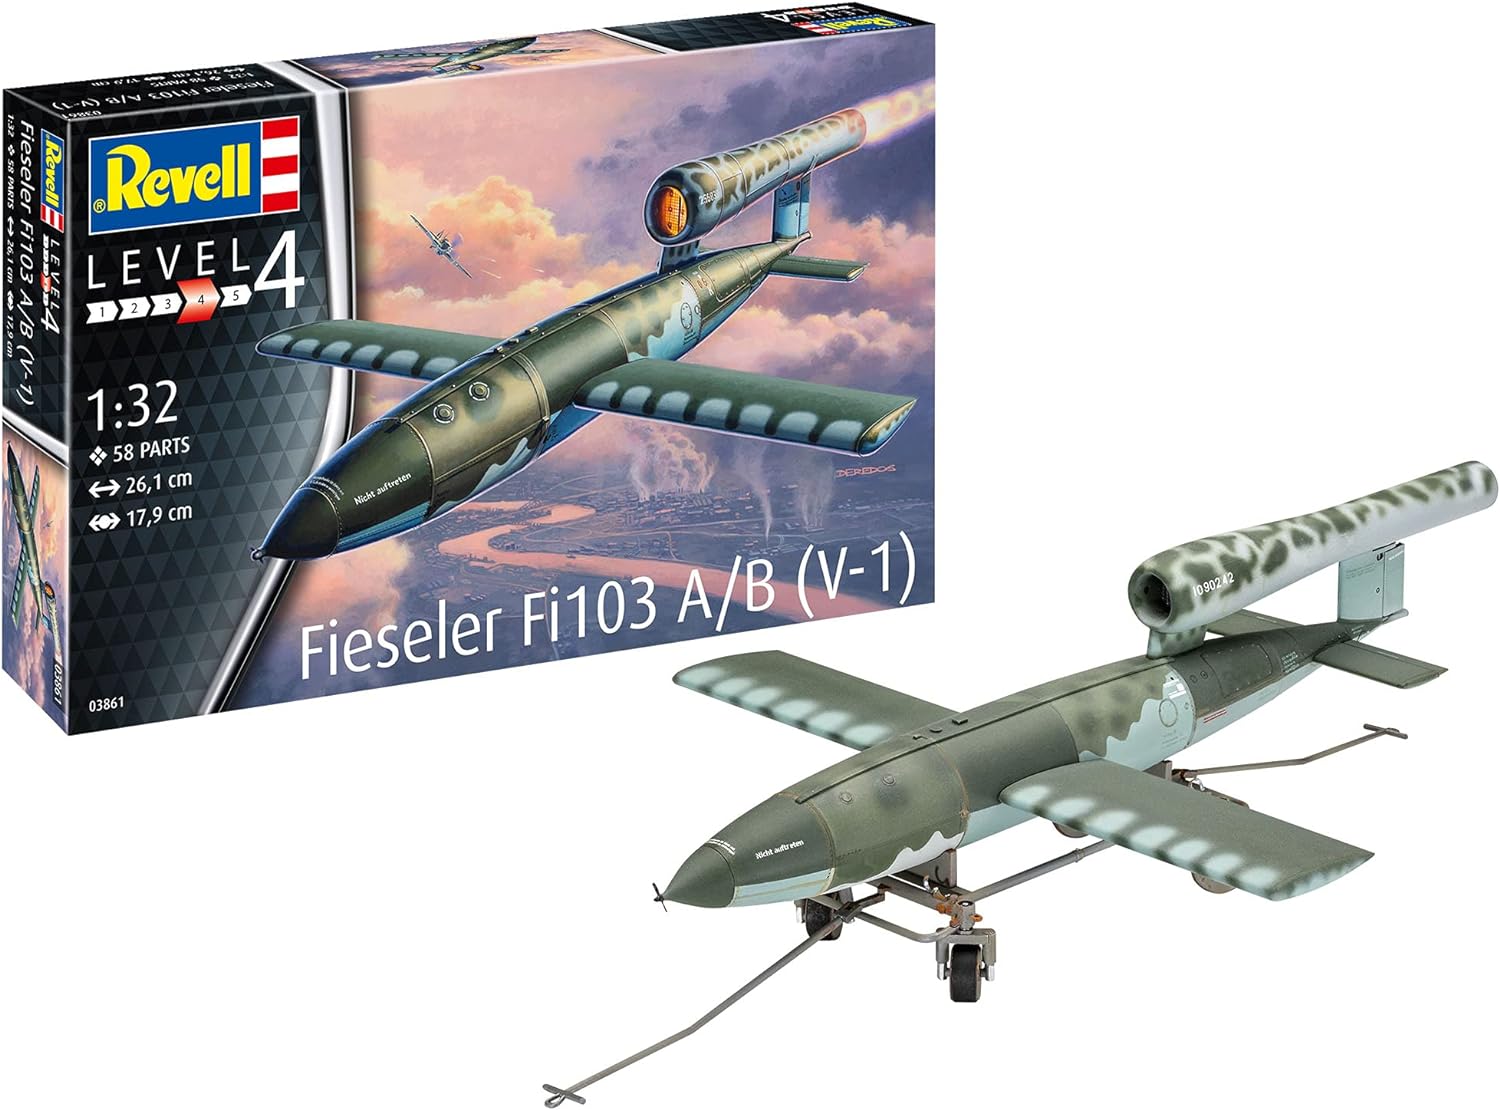 Fieseler Fi103 A/B V-1 1:32 Scale Kit